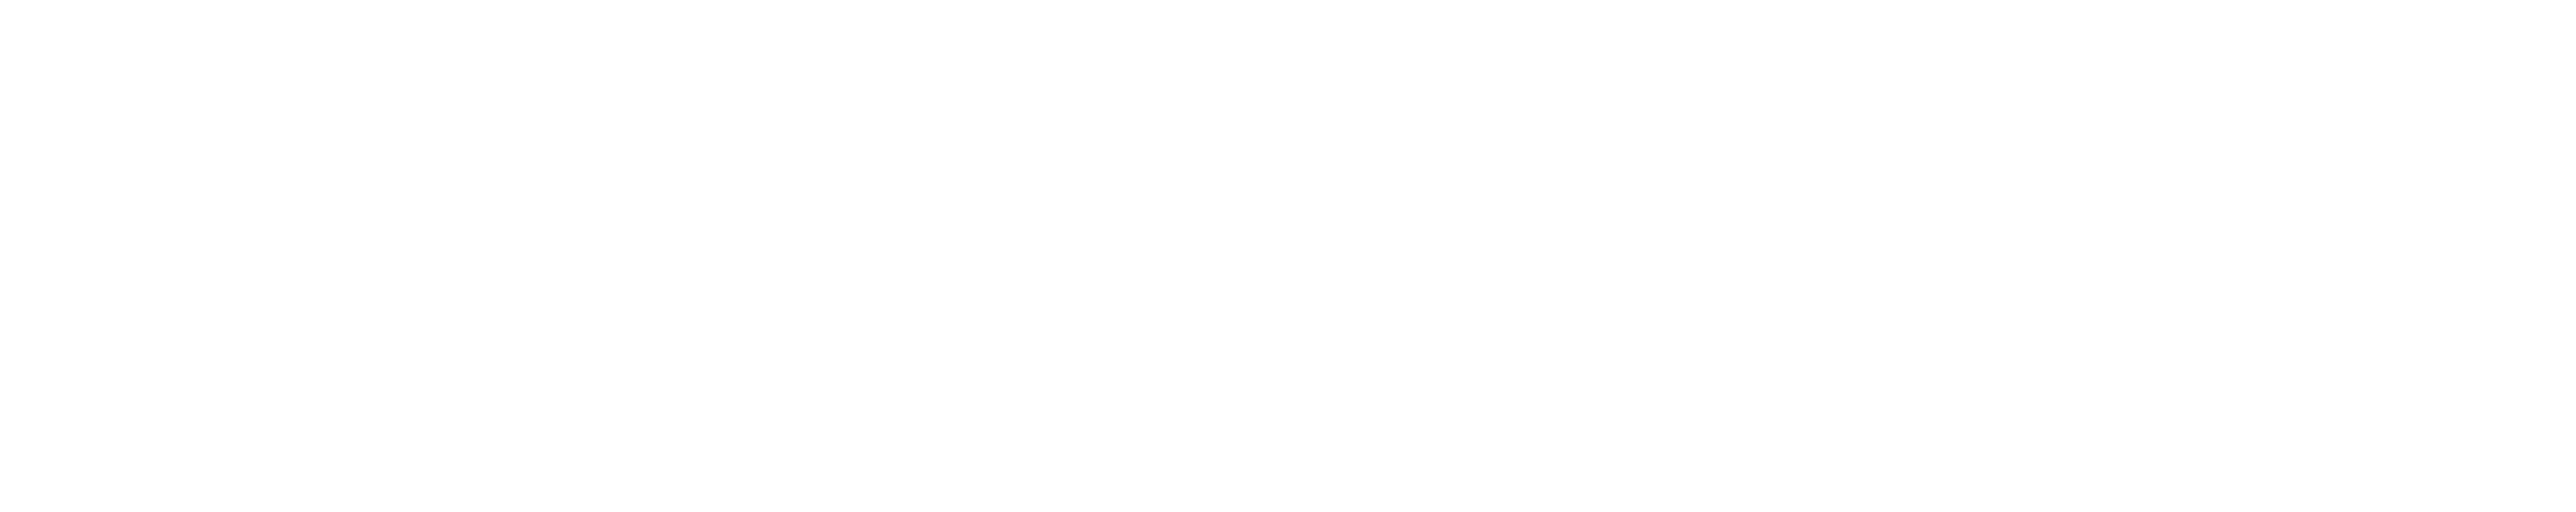 Clearwater Bay International Baptist Church